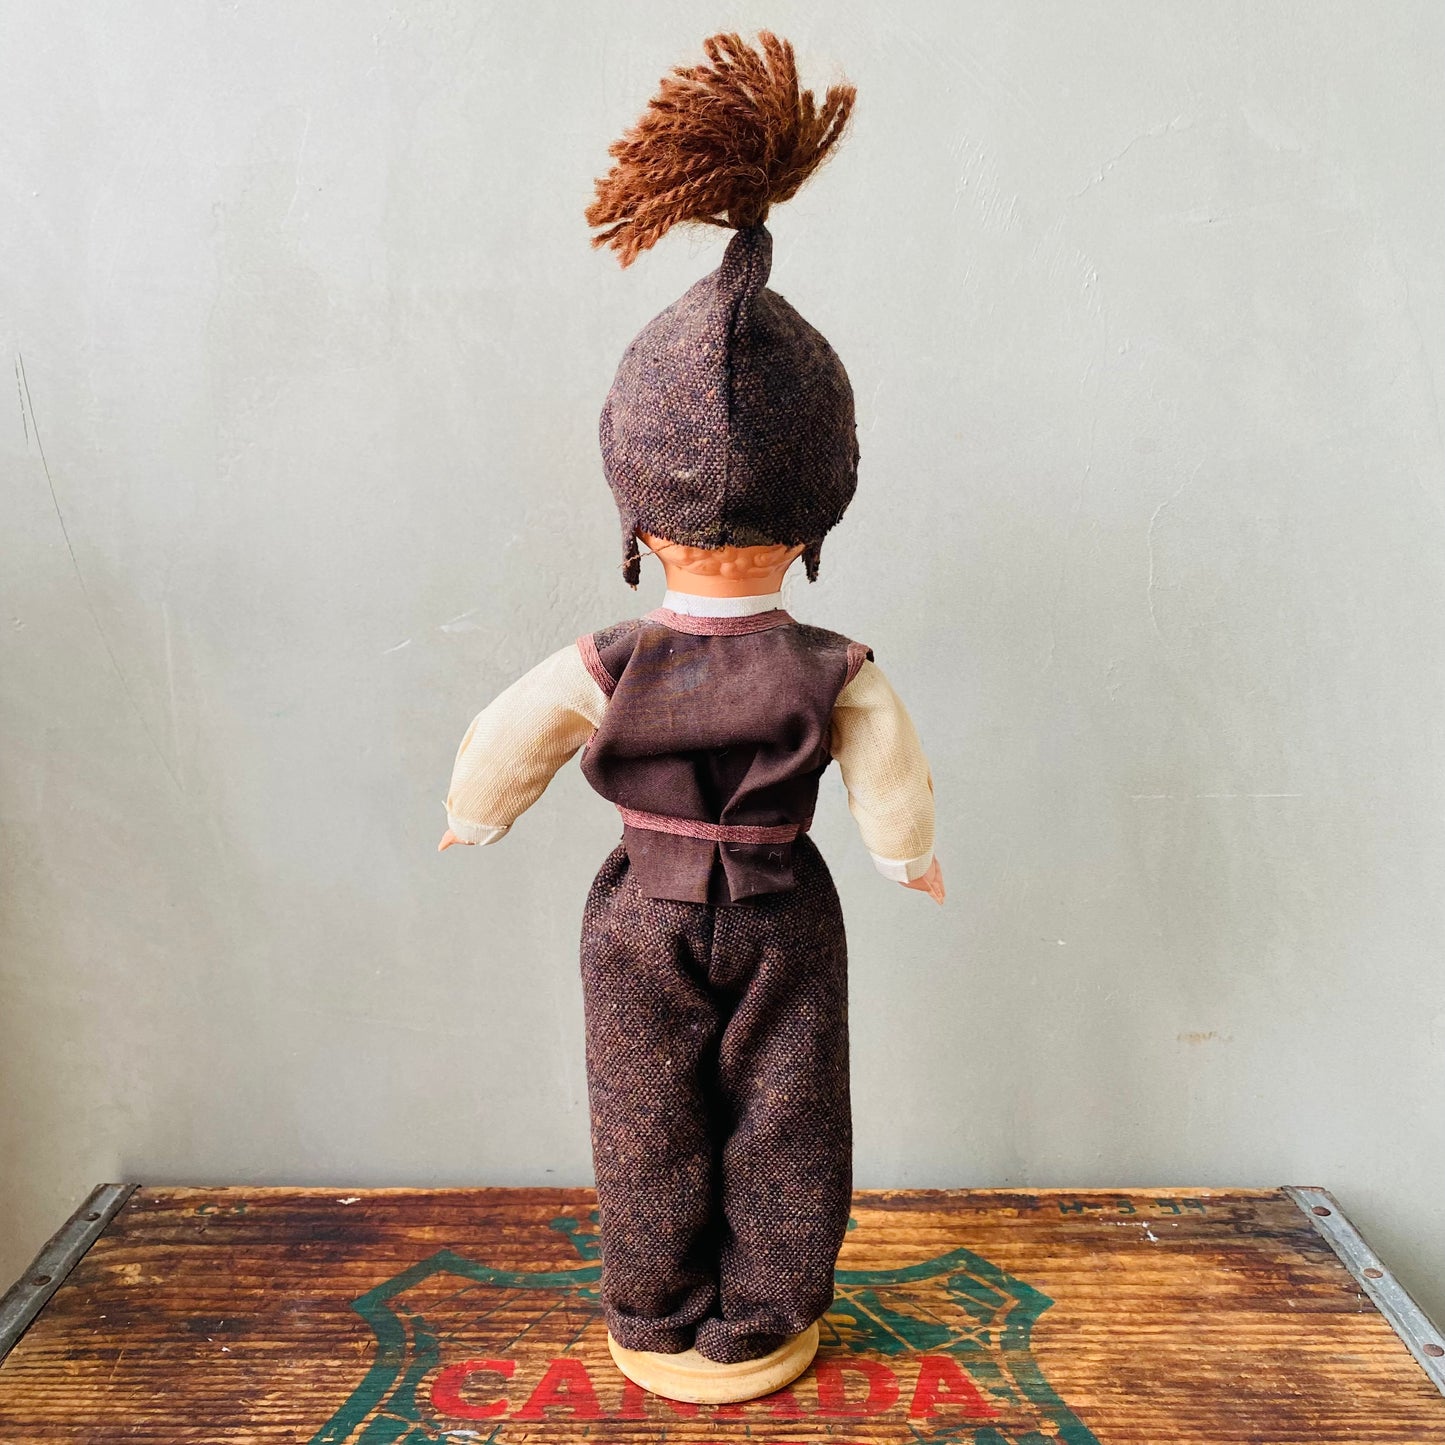 【vintage】“MADEIR” Portugal costume doll